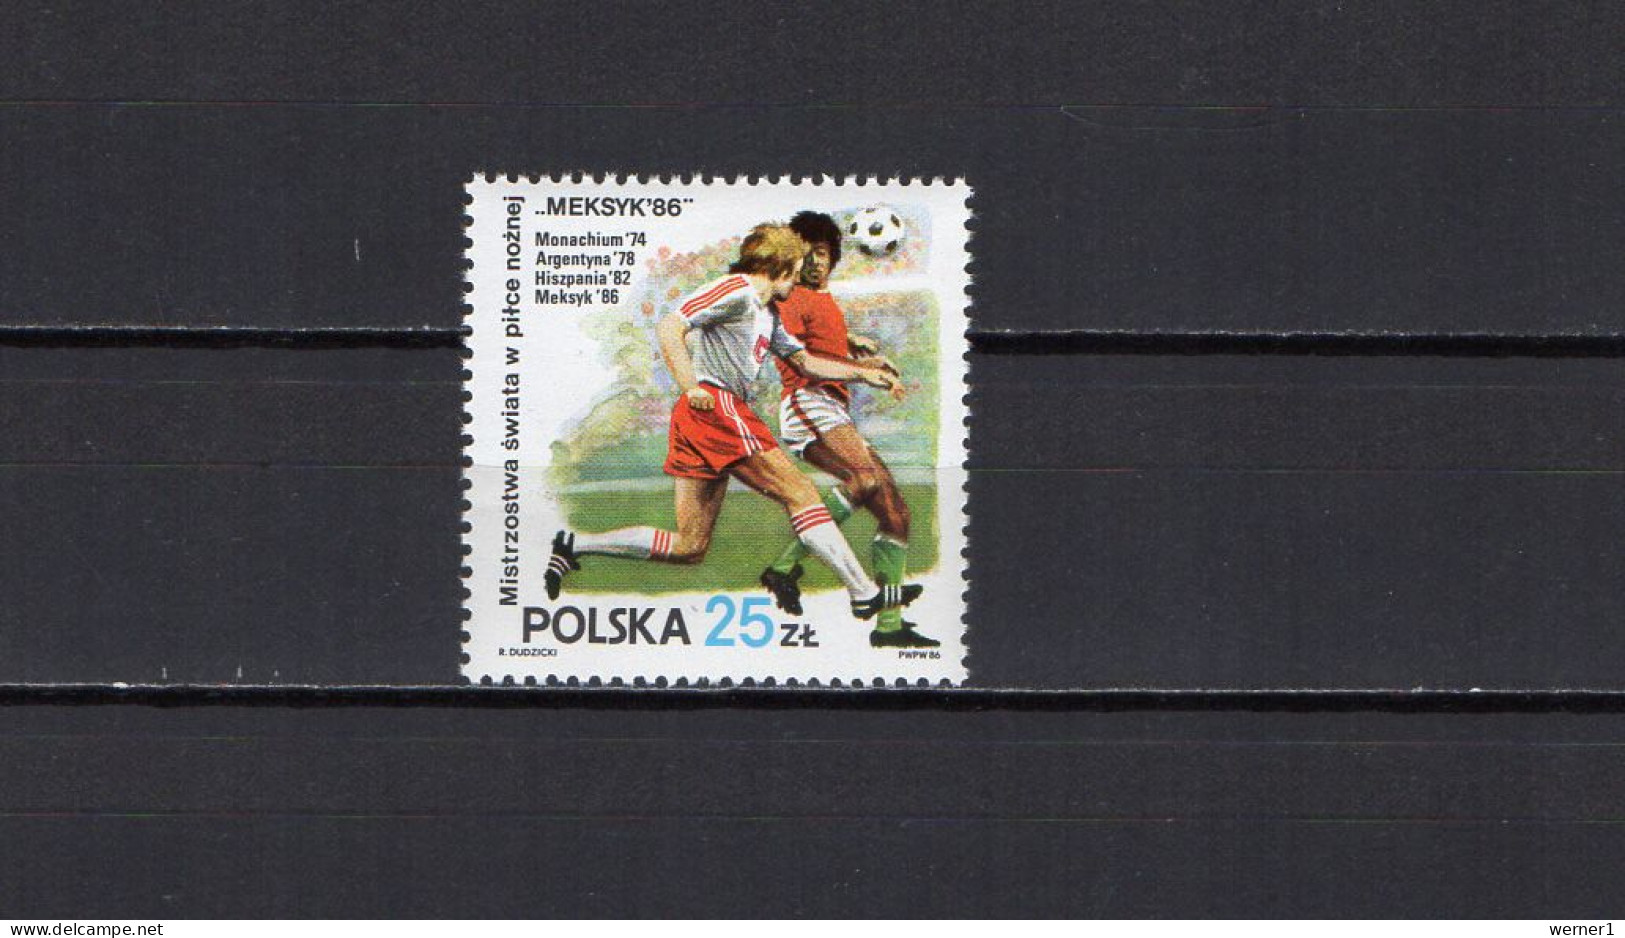 Poland 1986 Football Soccer World Cup Stamp MNH - 1986 – México